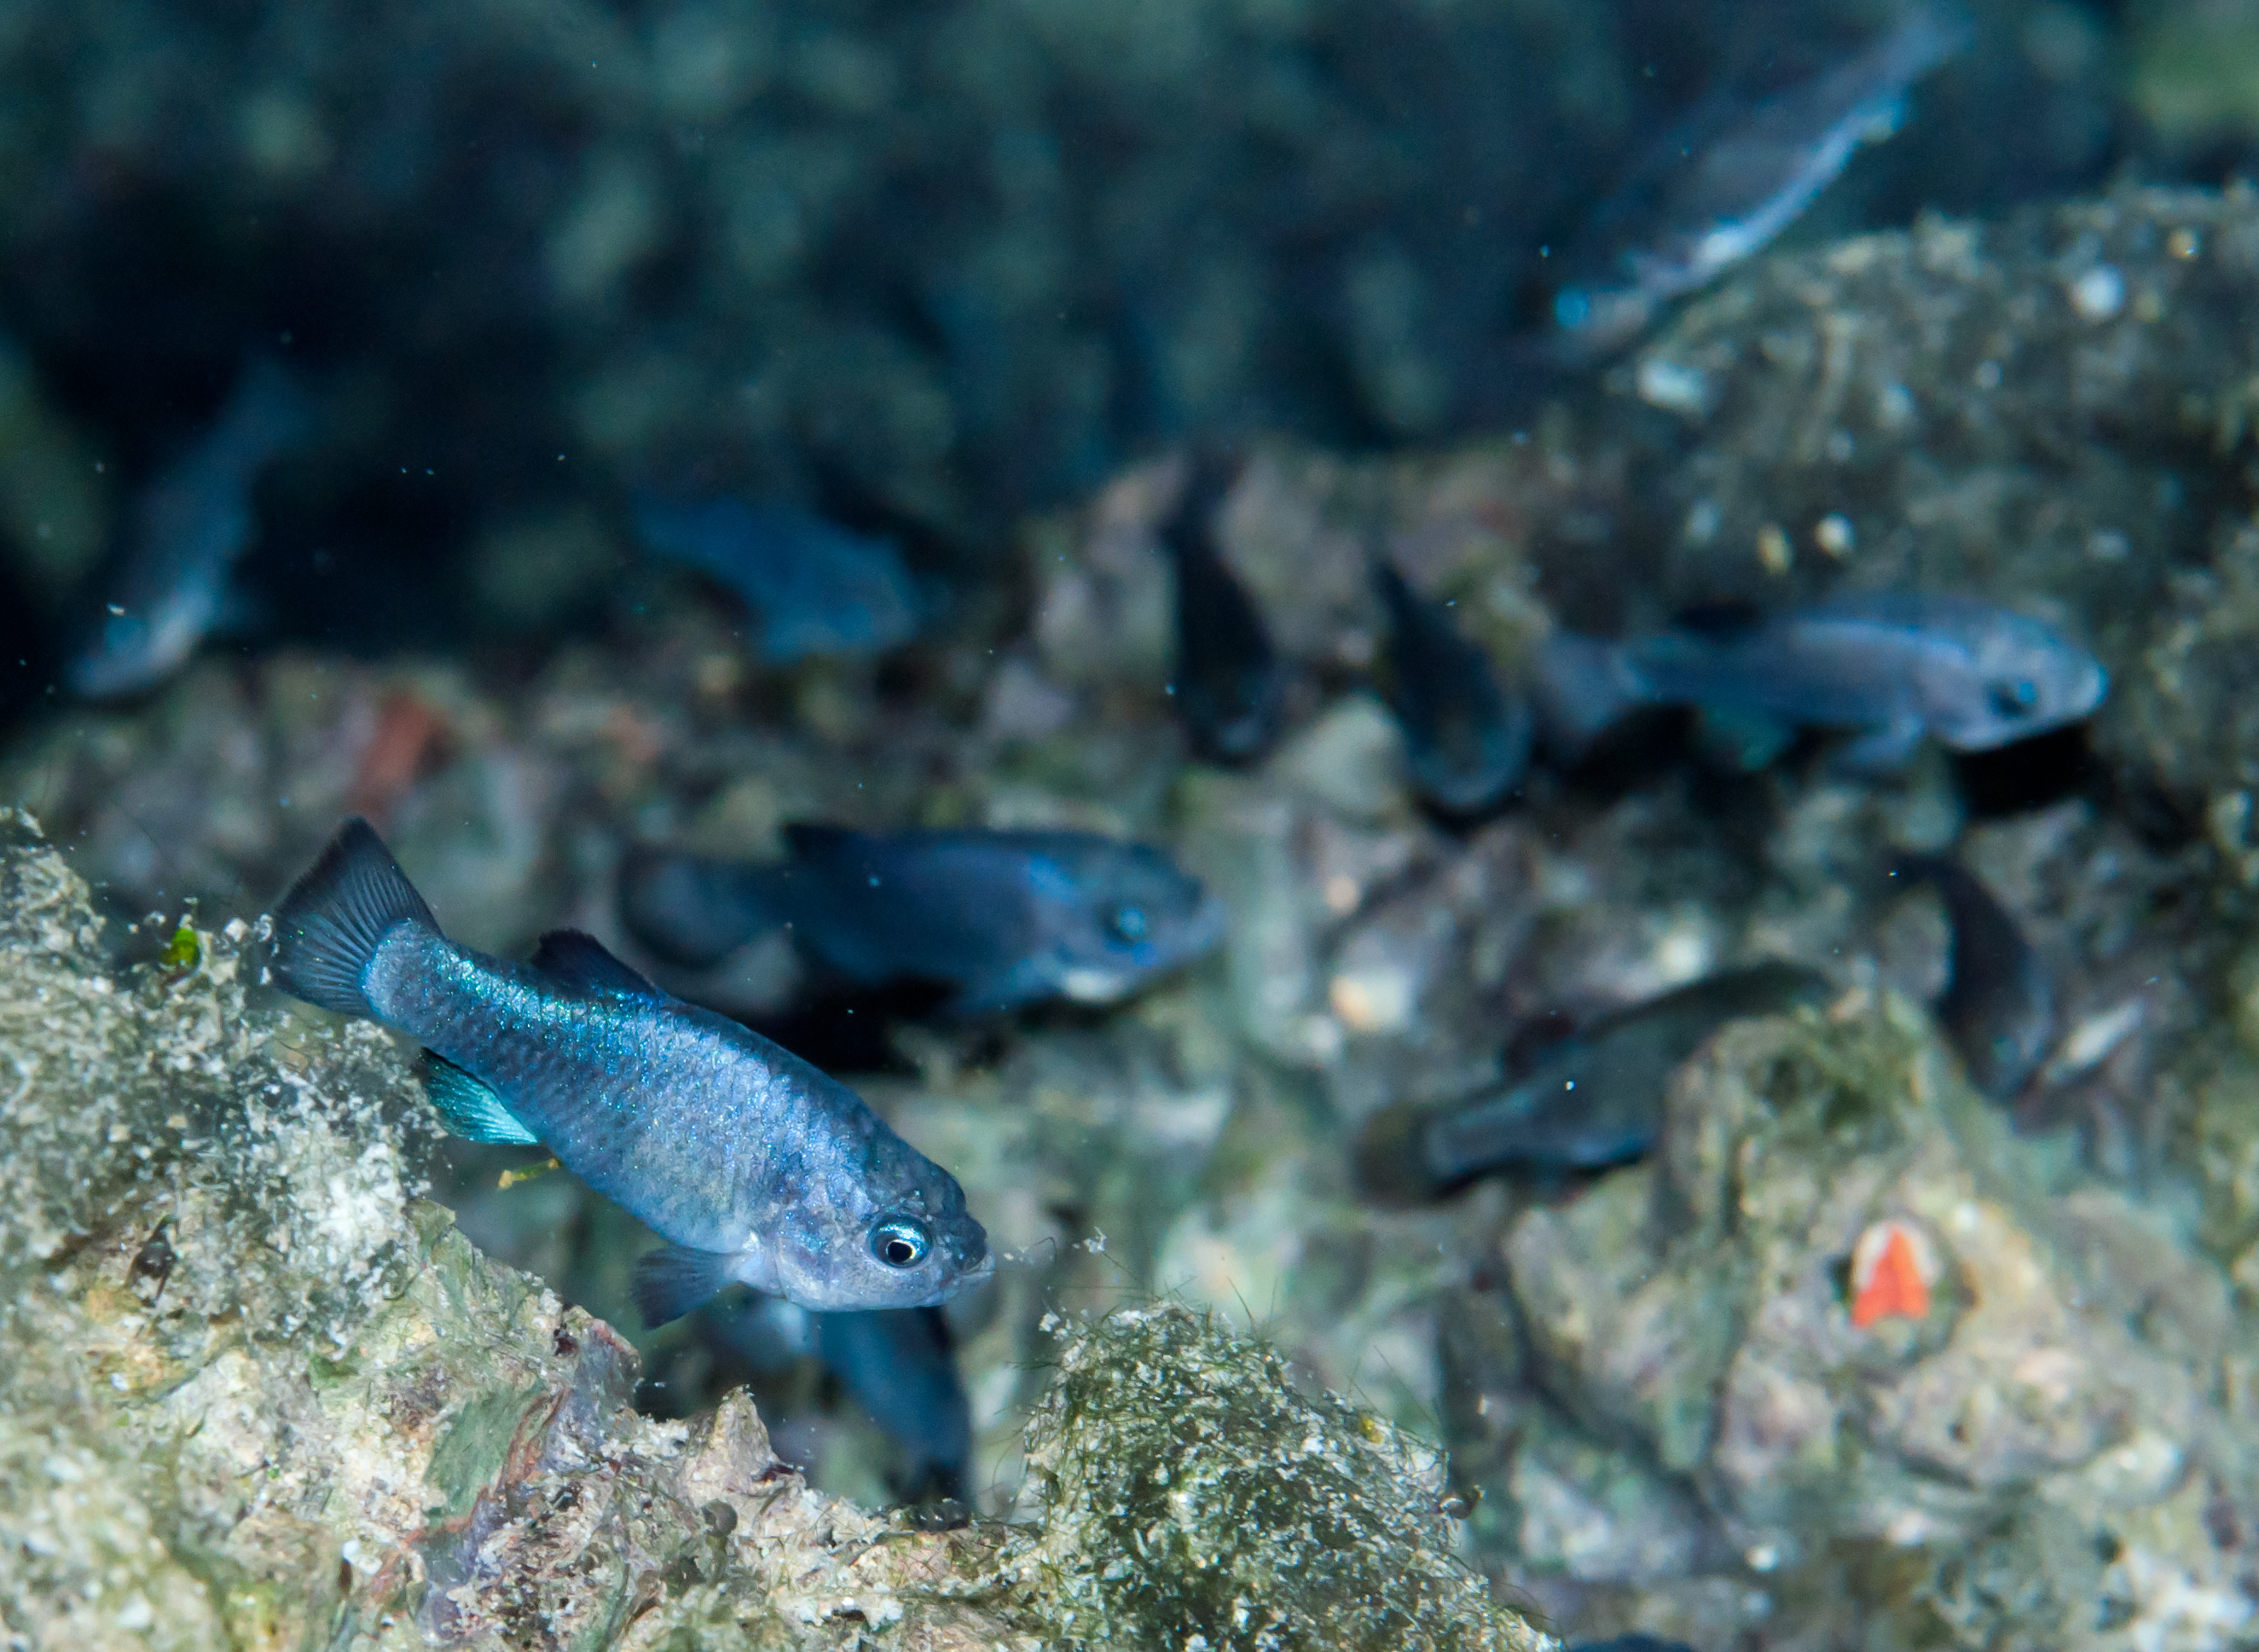 A small blue fish swims above green algae.